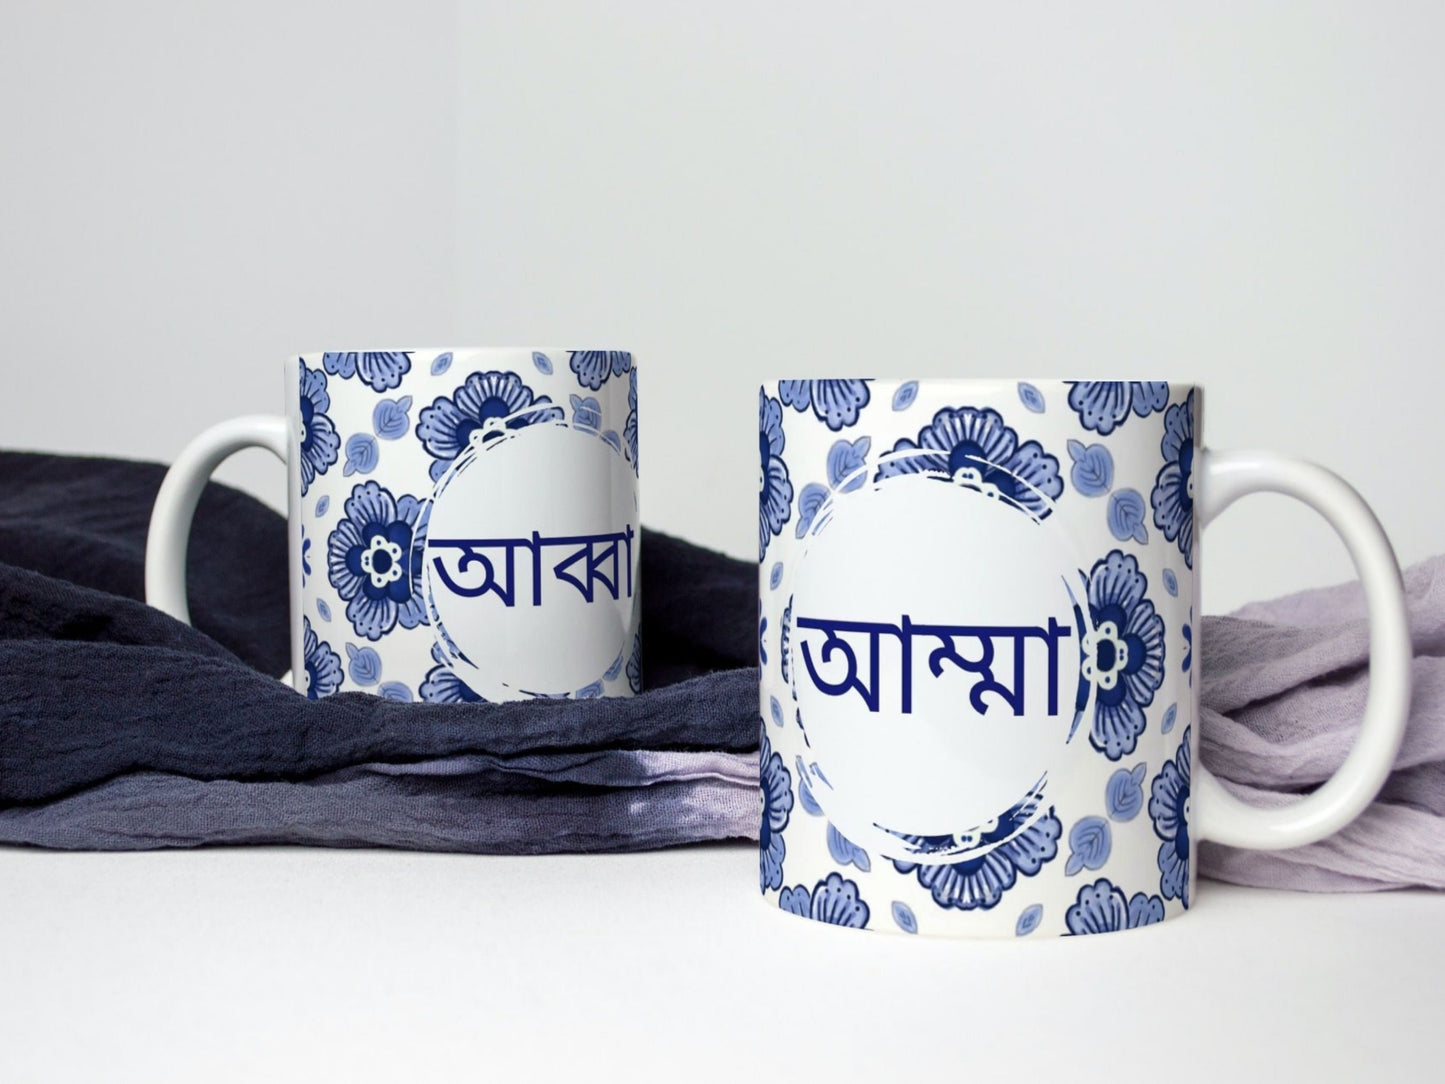 Amma or Abba Bangla Mug for Eid,